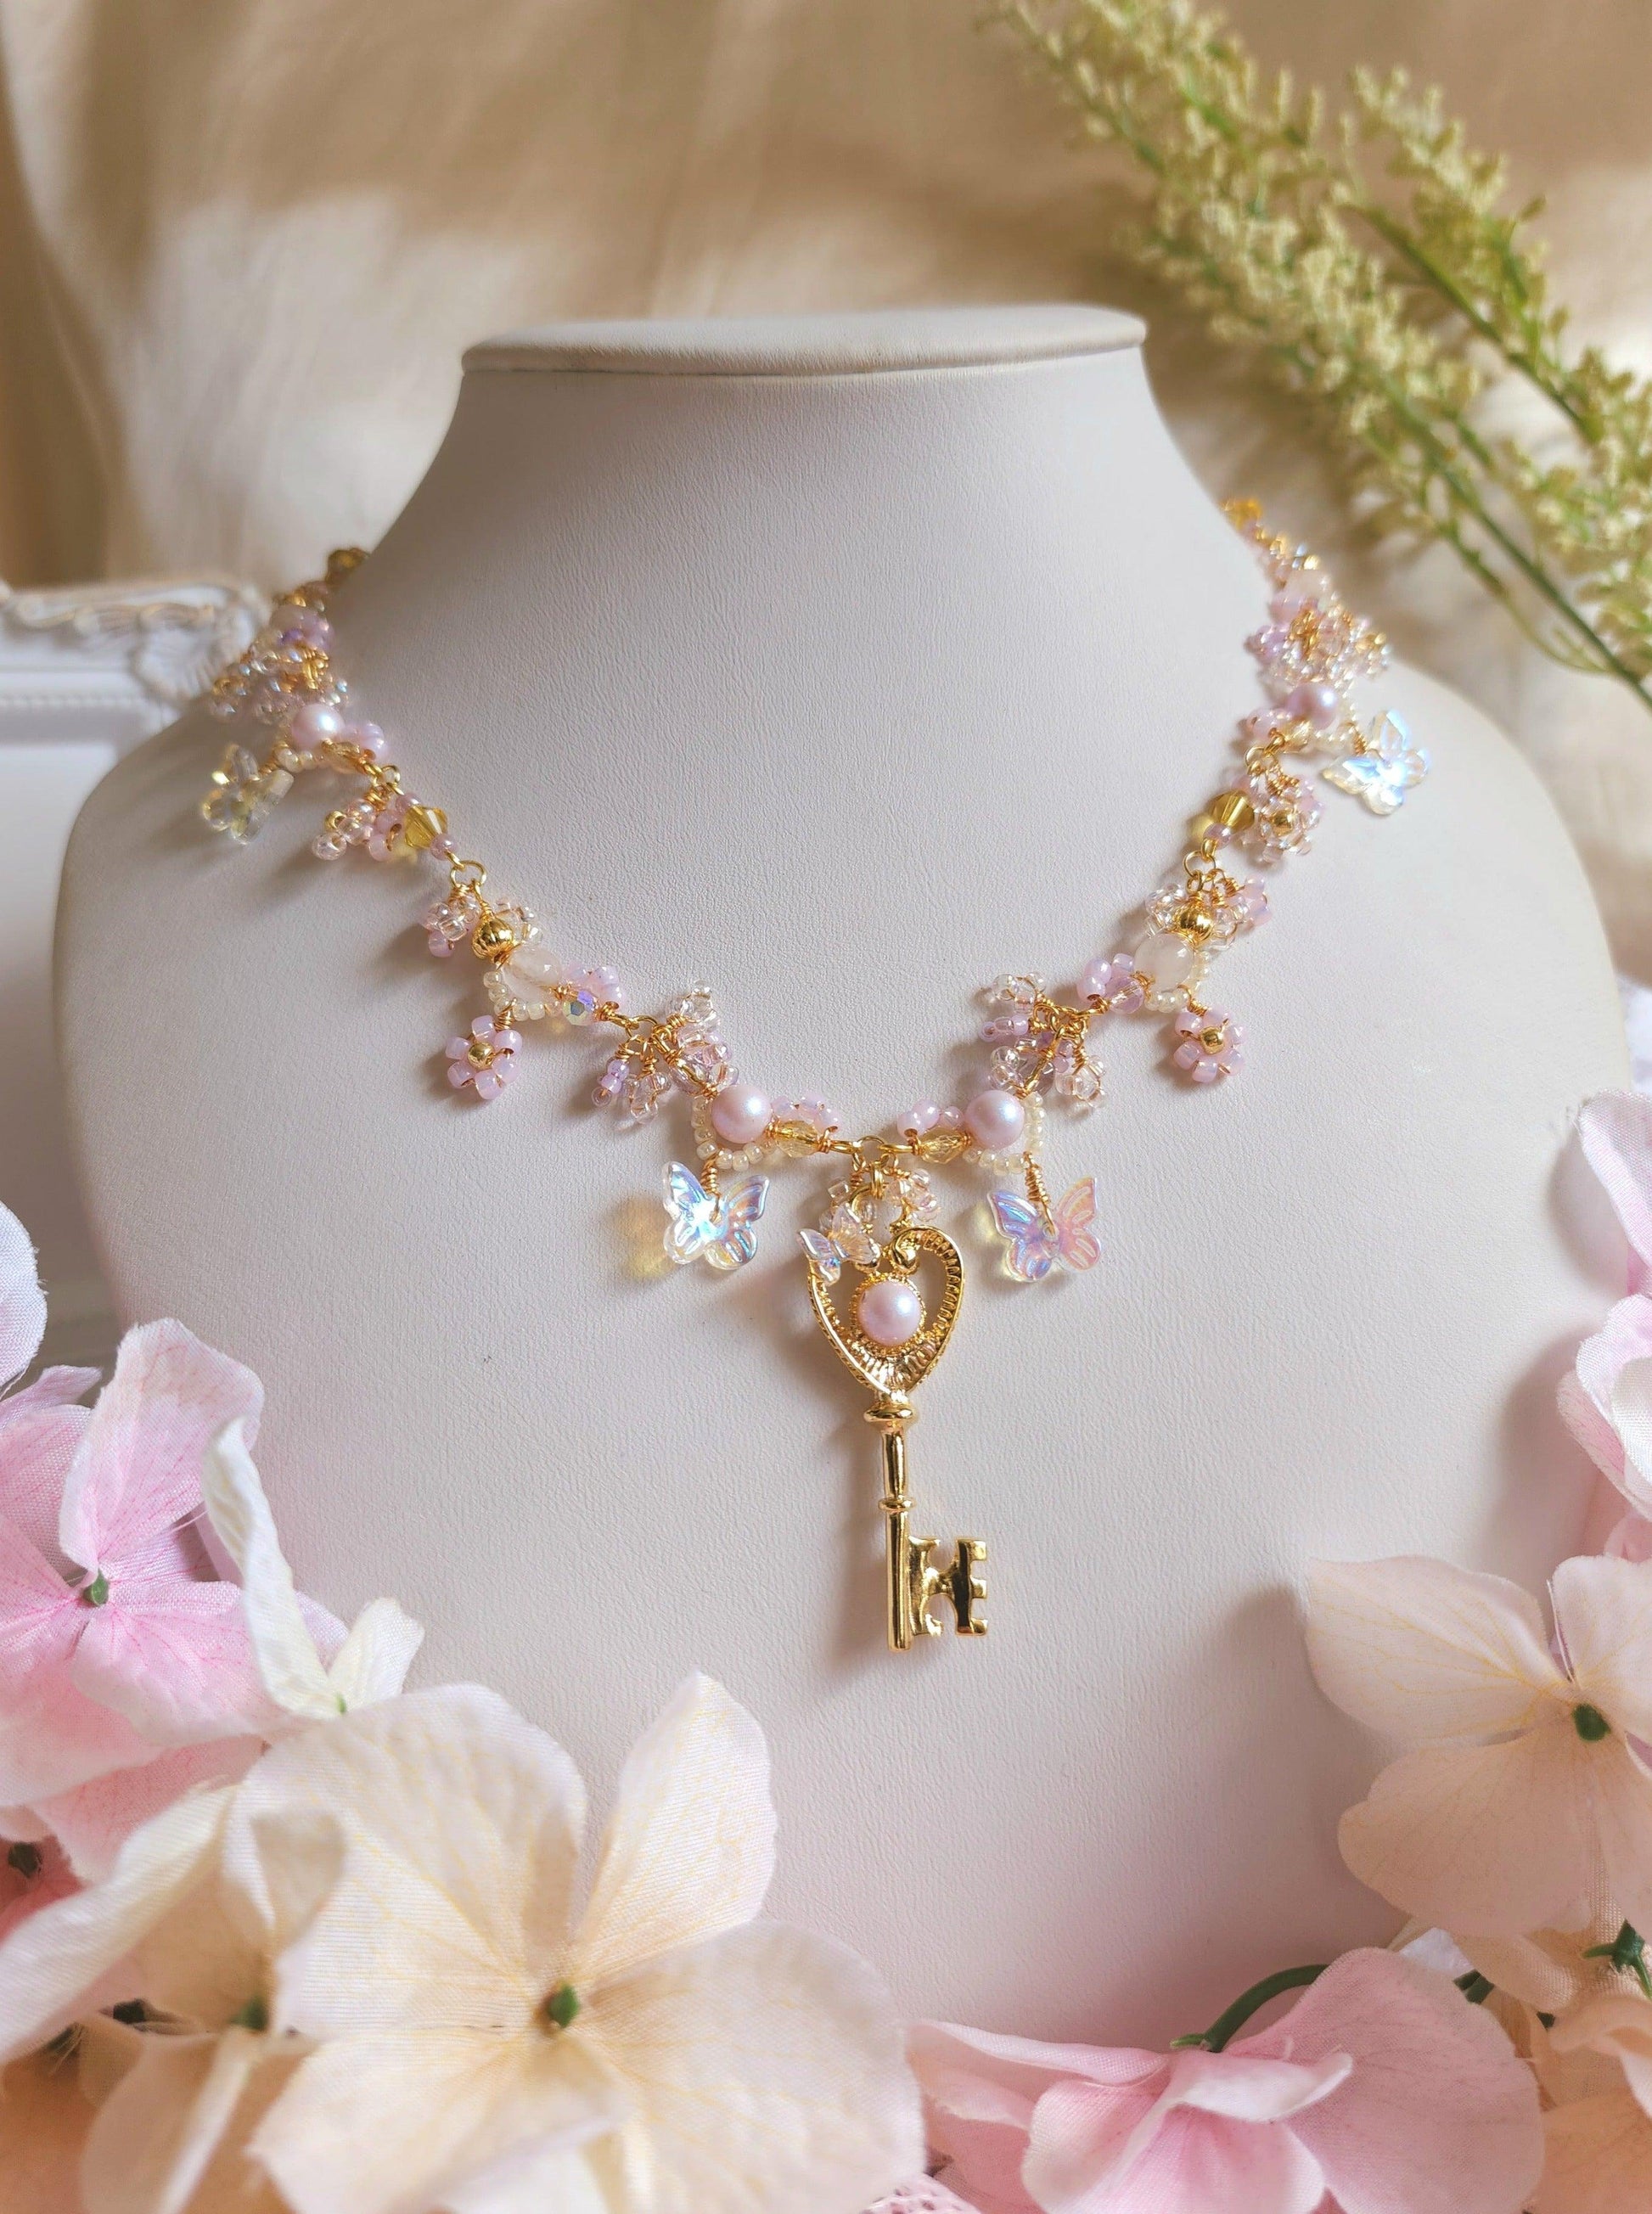 Fairy Garden's Key Necklace (Newly Restocked) - By Cocoyu